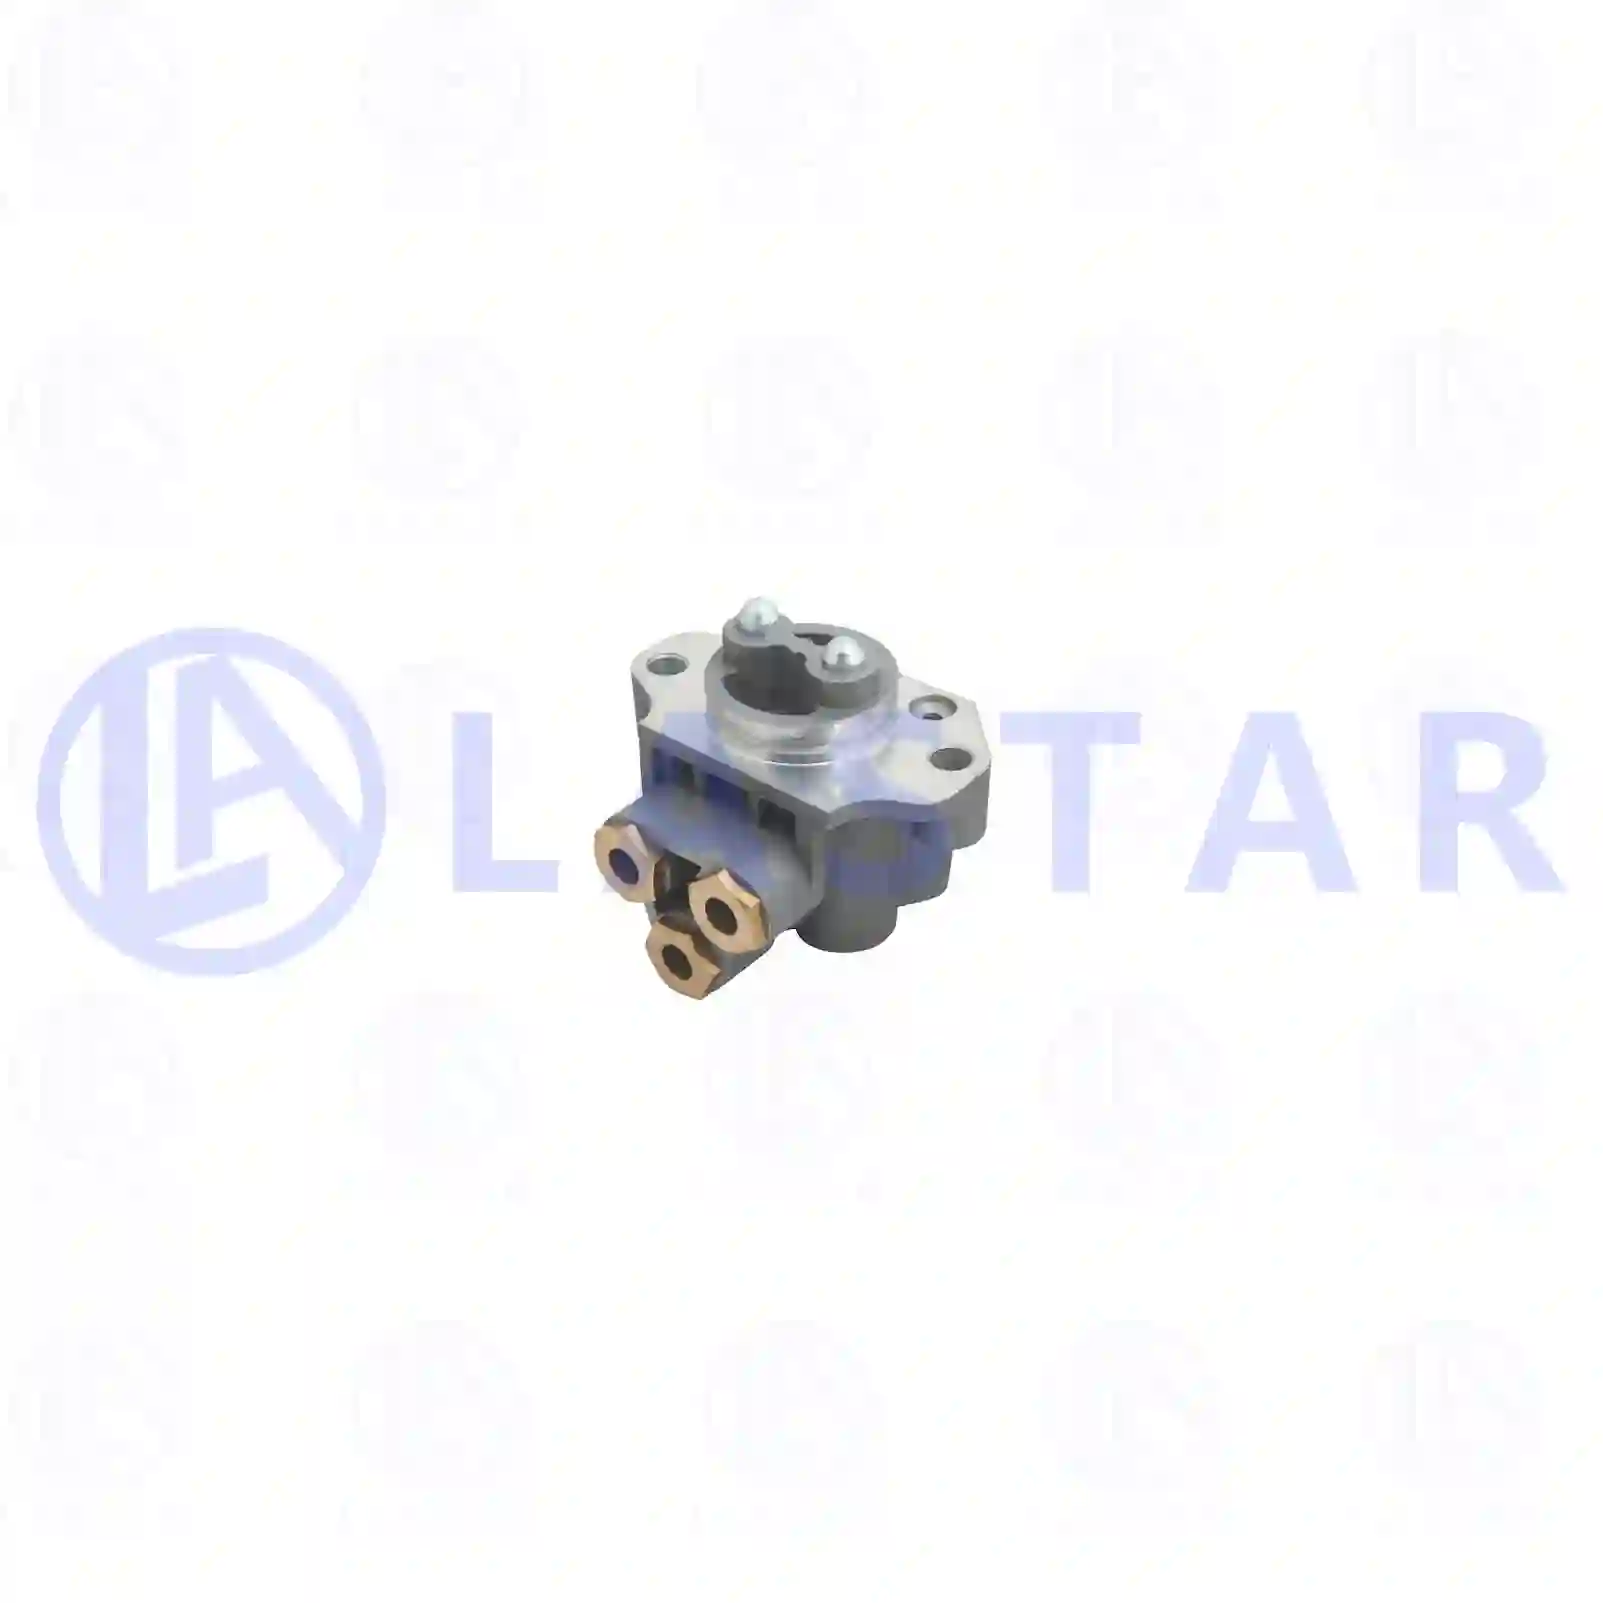 Gear Shift Housing Shut-off valve, with bypass, la no: 77732623 ,  oem no:0012608857, 0012609057, 0022600157, 0022600557, 0022600757, 0022602357, 0022602457, 0022604157, 0022606157 Lastar Spare Part | Truck Spare Parts, Auotomotive Spare Parts